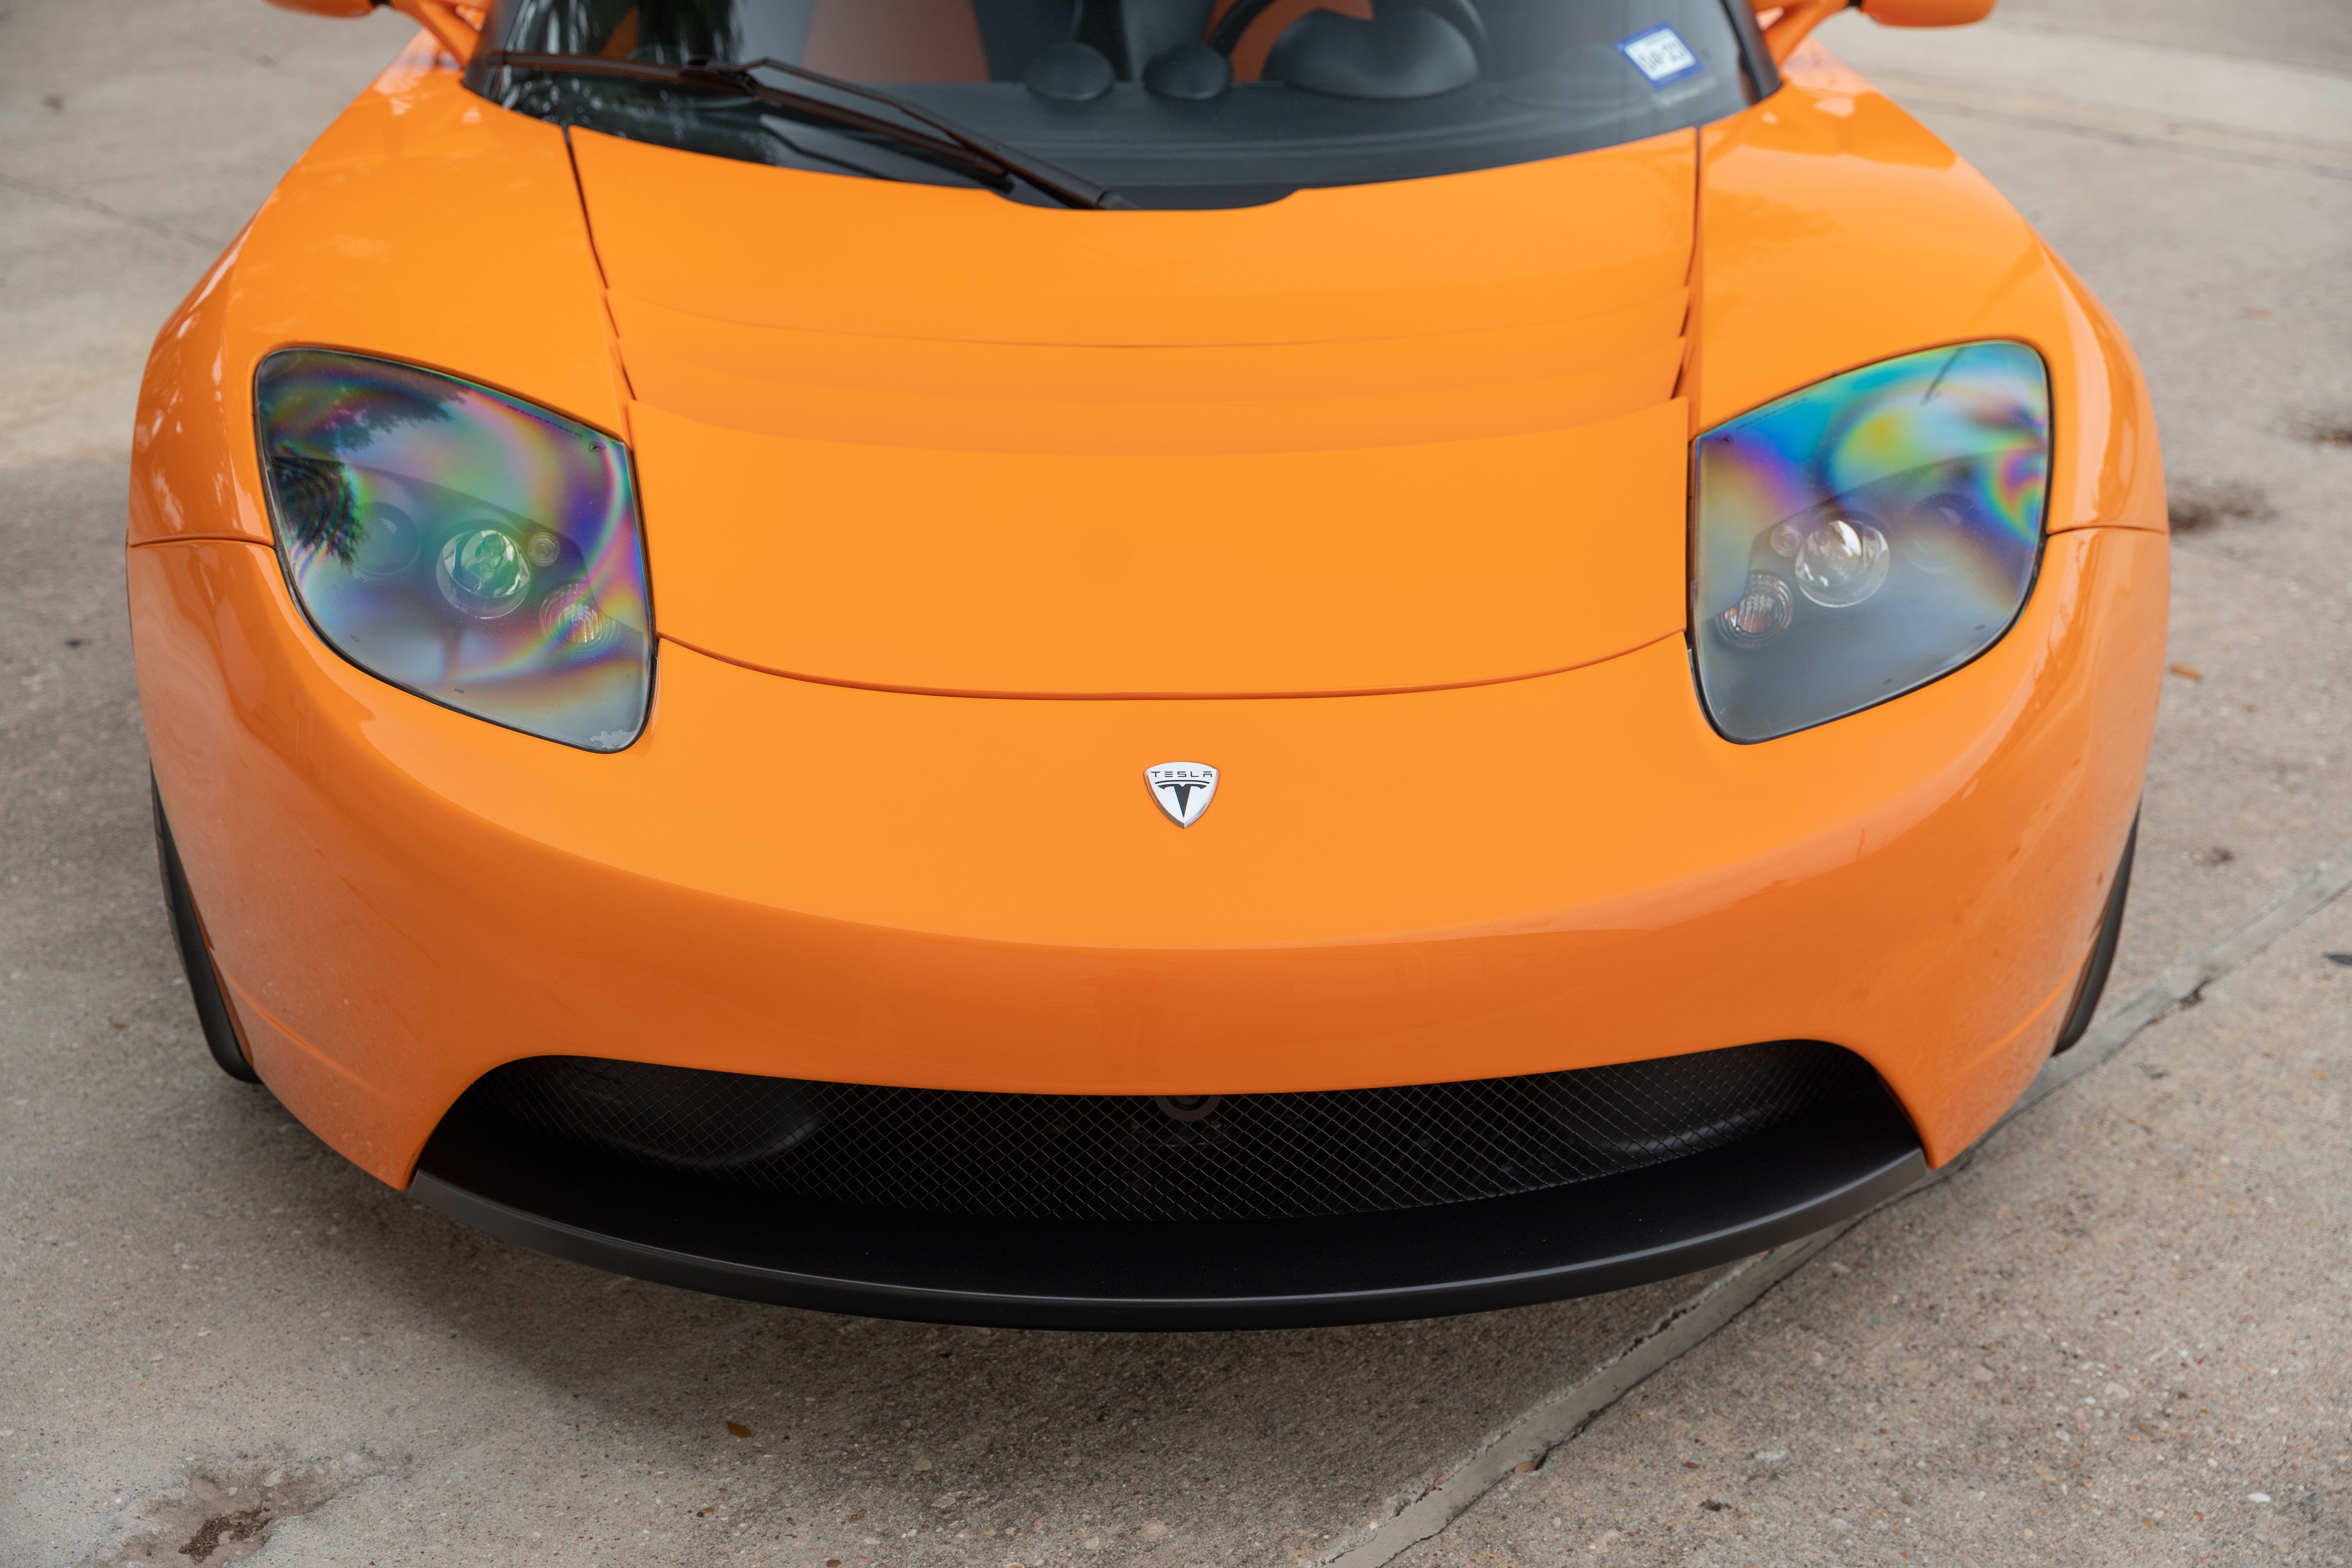 2010 Very Orange Metallic Tesla Roadster in Austin, TX.